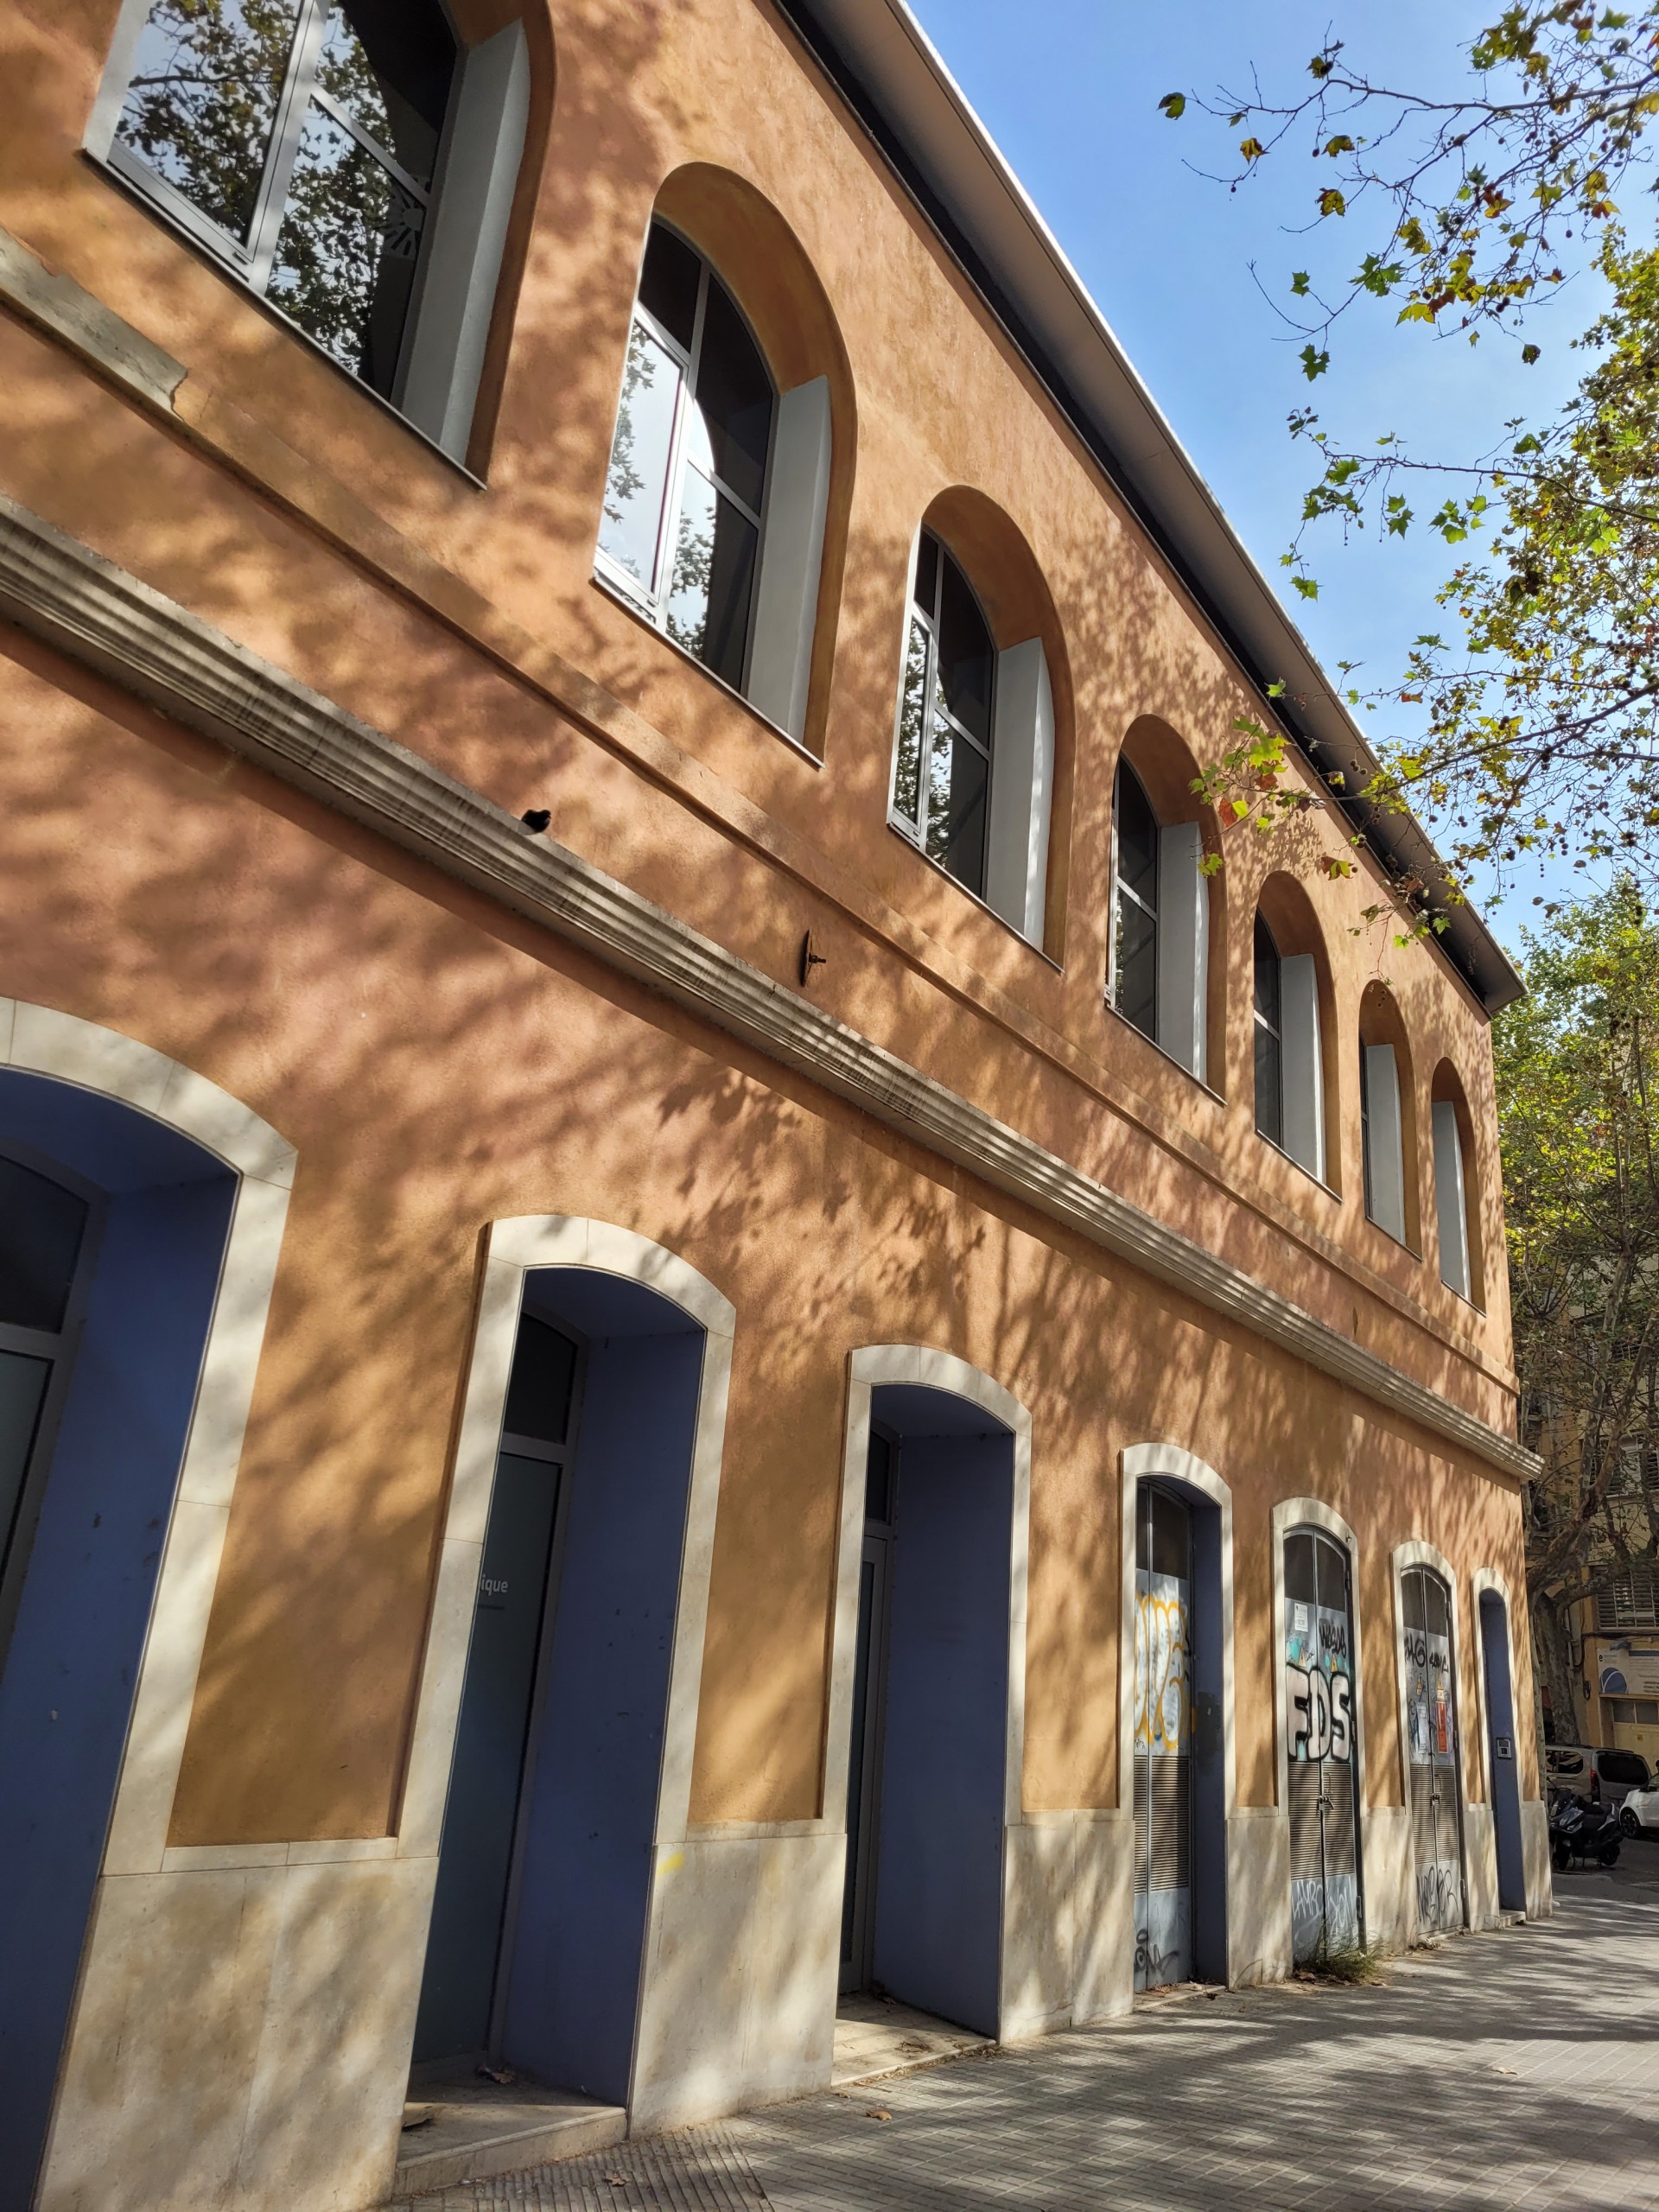 Alquiler de Oficinas en Calle Llacuna | Tu Espacio Ideal en Barcelona